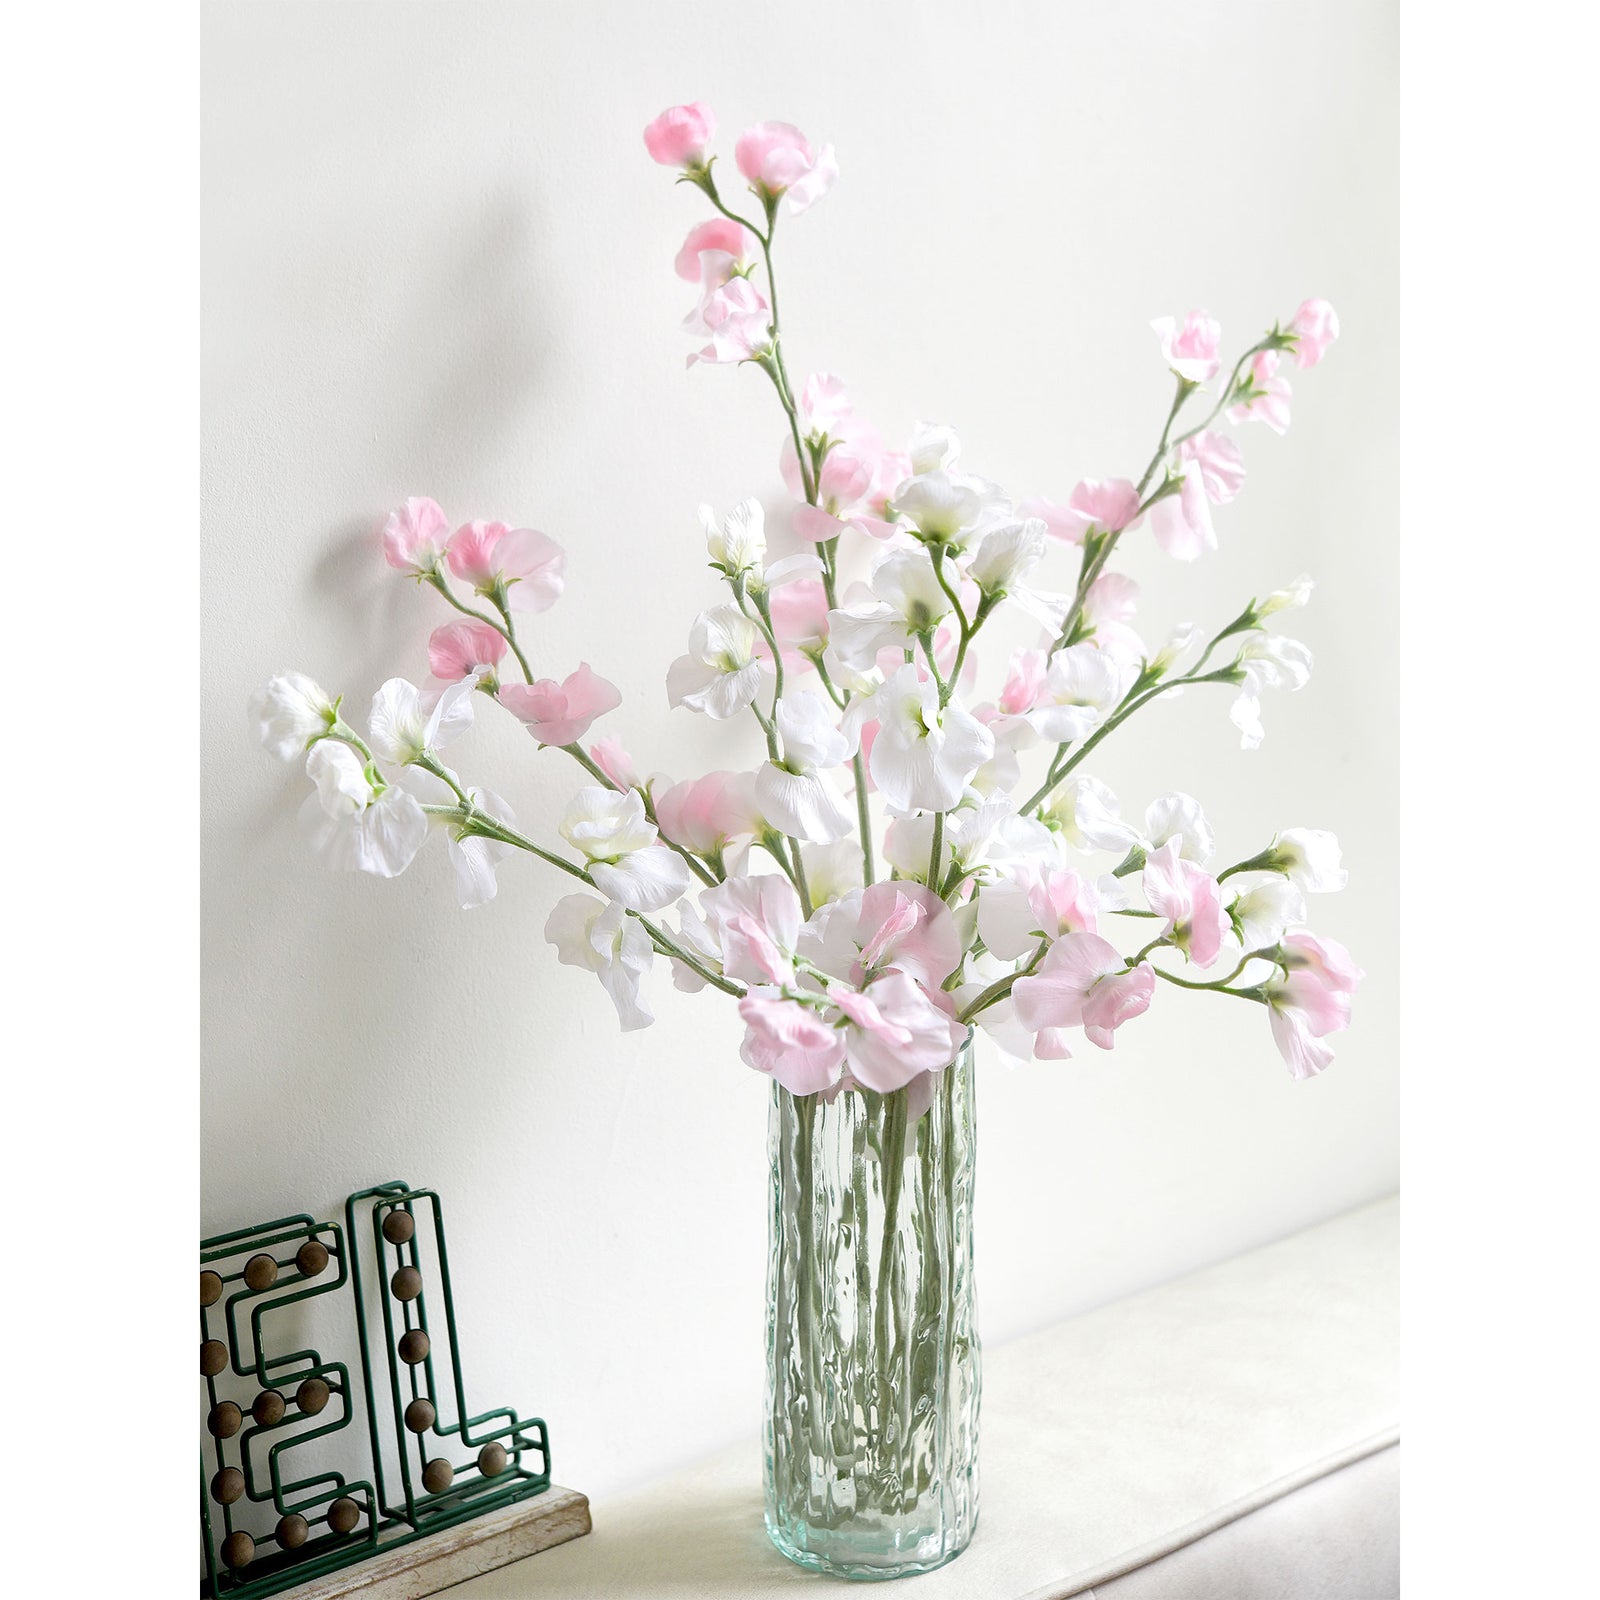 Misty Light Pink Sweet Pea Flowers Real Looking Artificial flowers Home Décor 24.8'' (6 Stems) FiveSeasonStuff